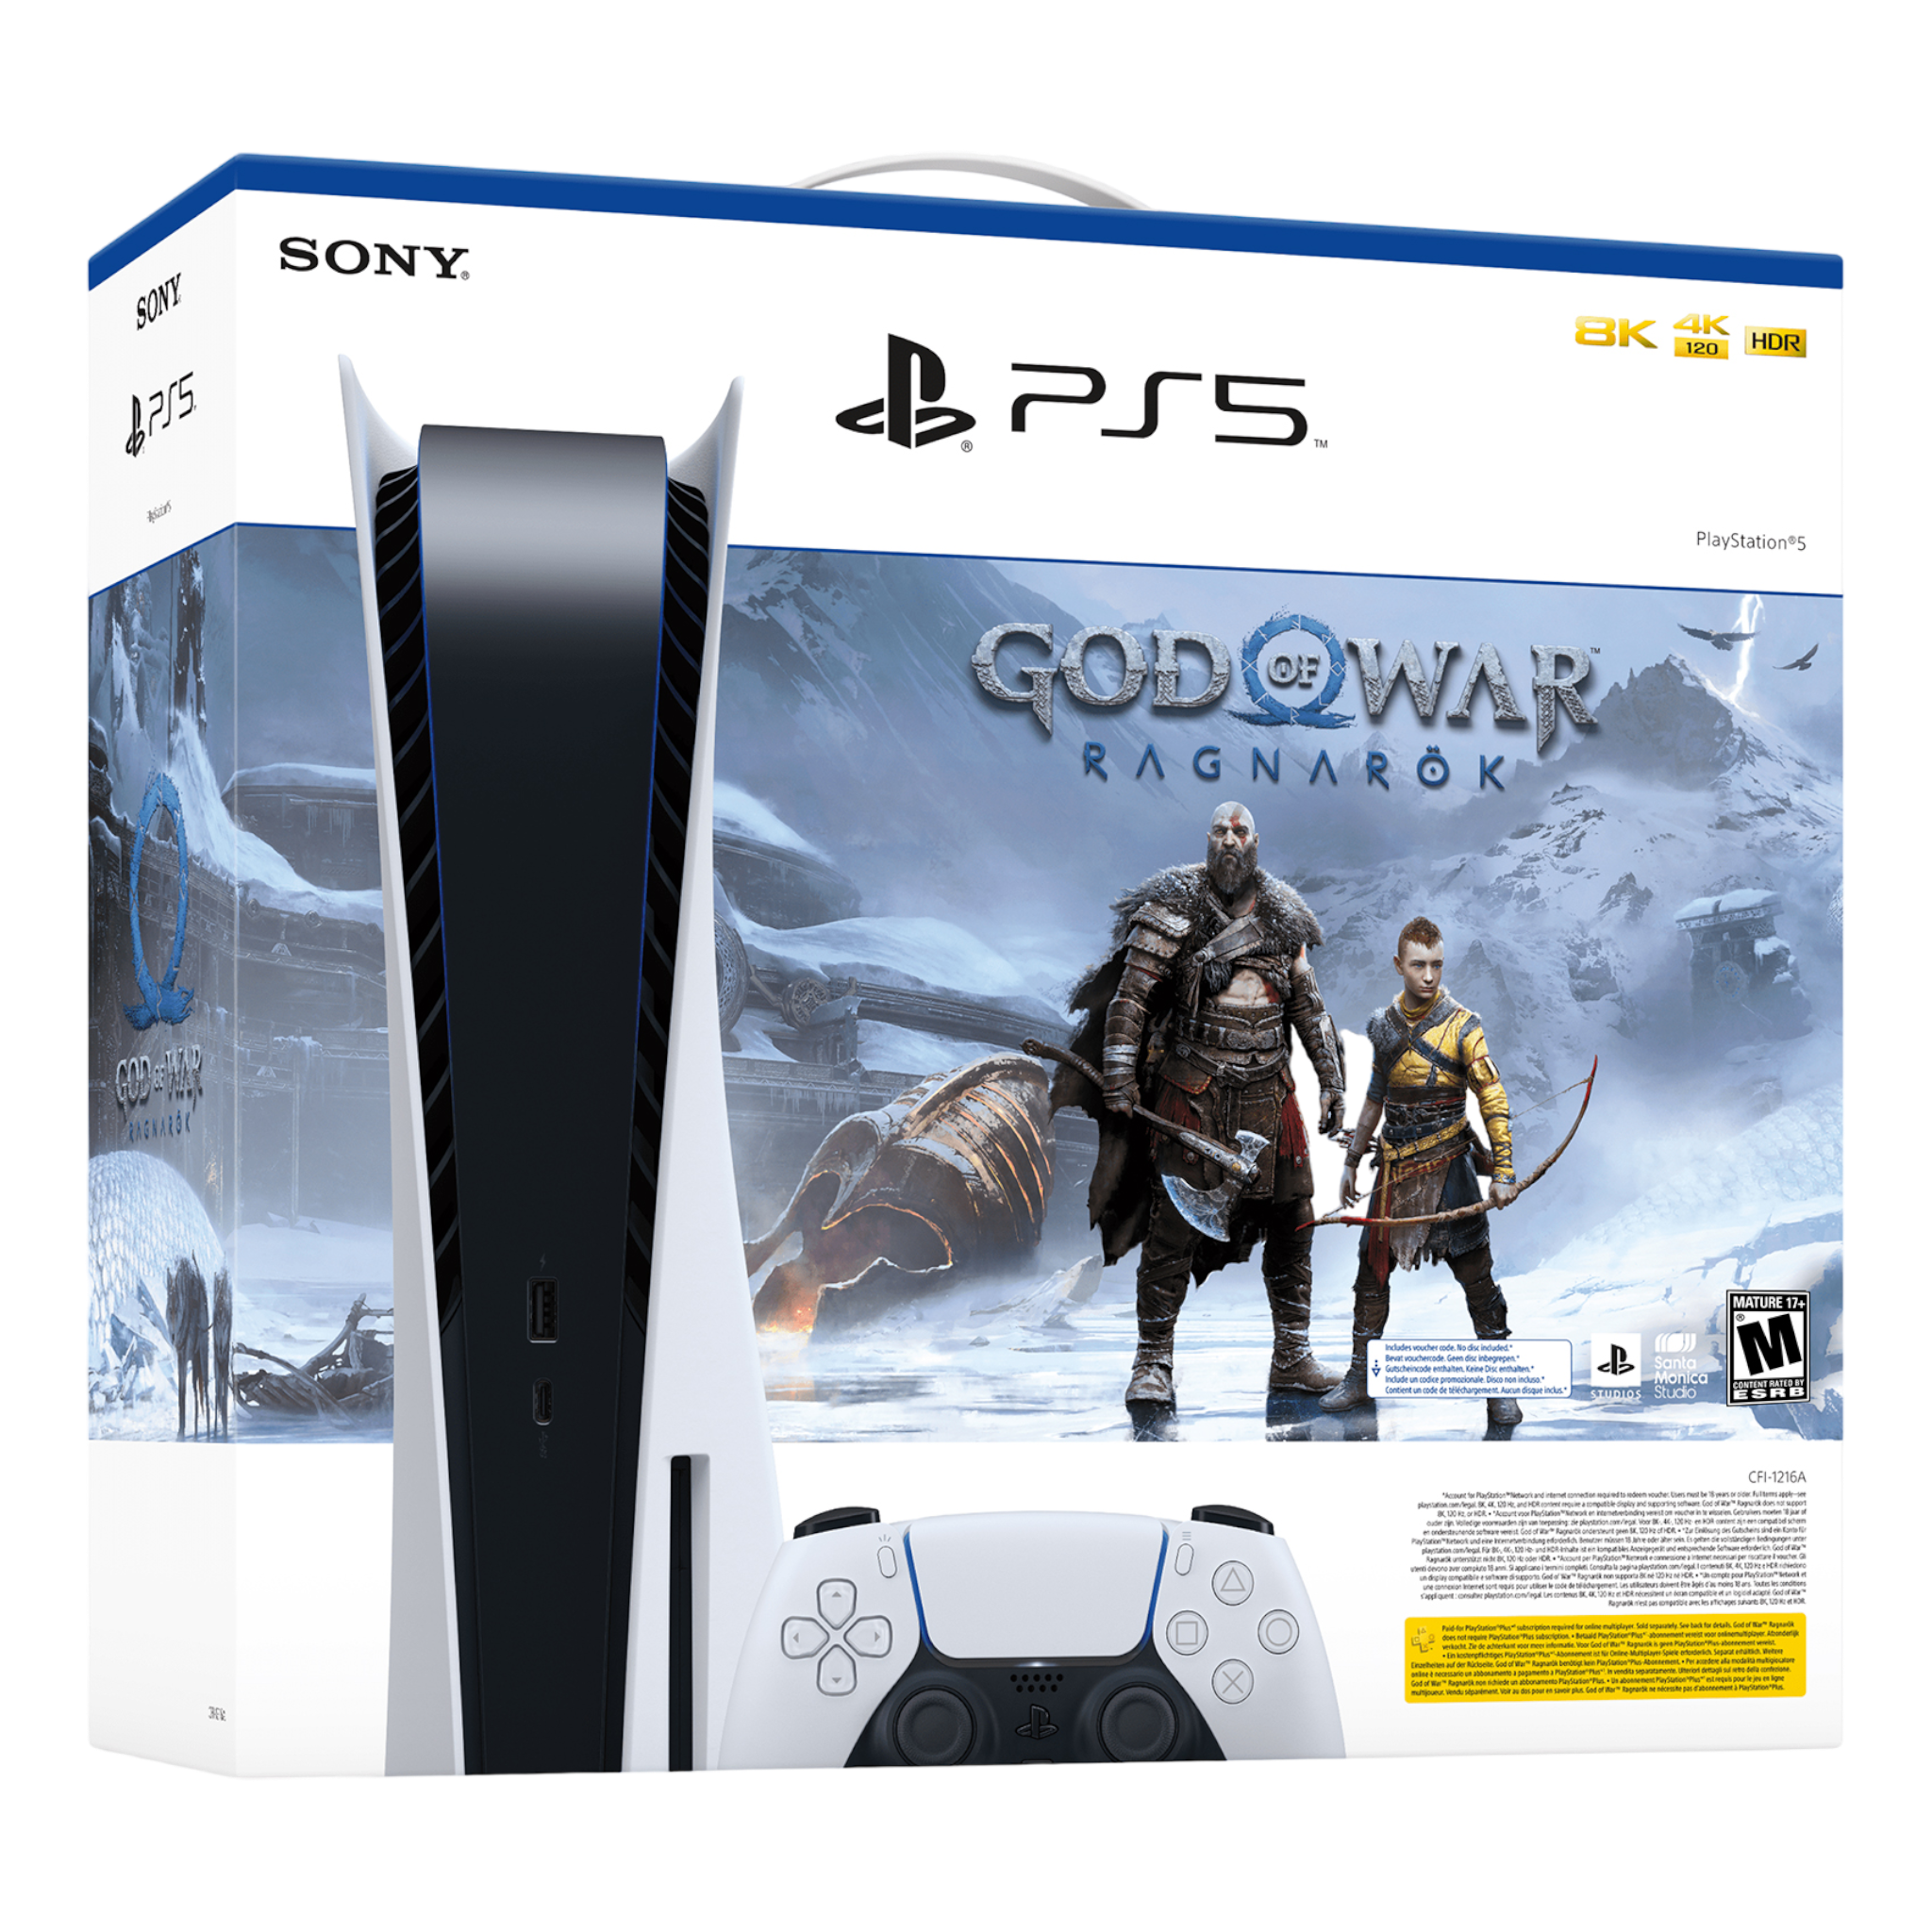 Sony PlayStation 5 Disc Edition PS5 – God of War Ragnarök Bundle